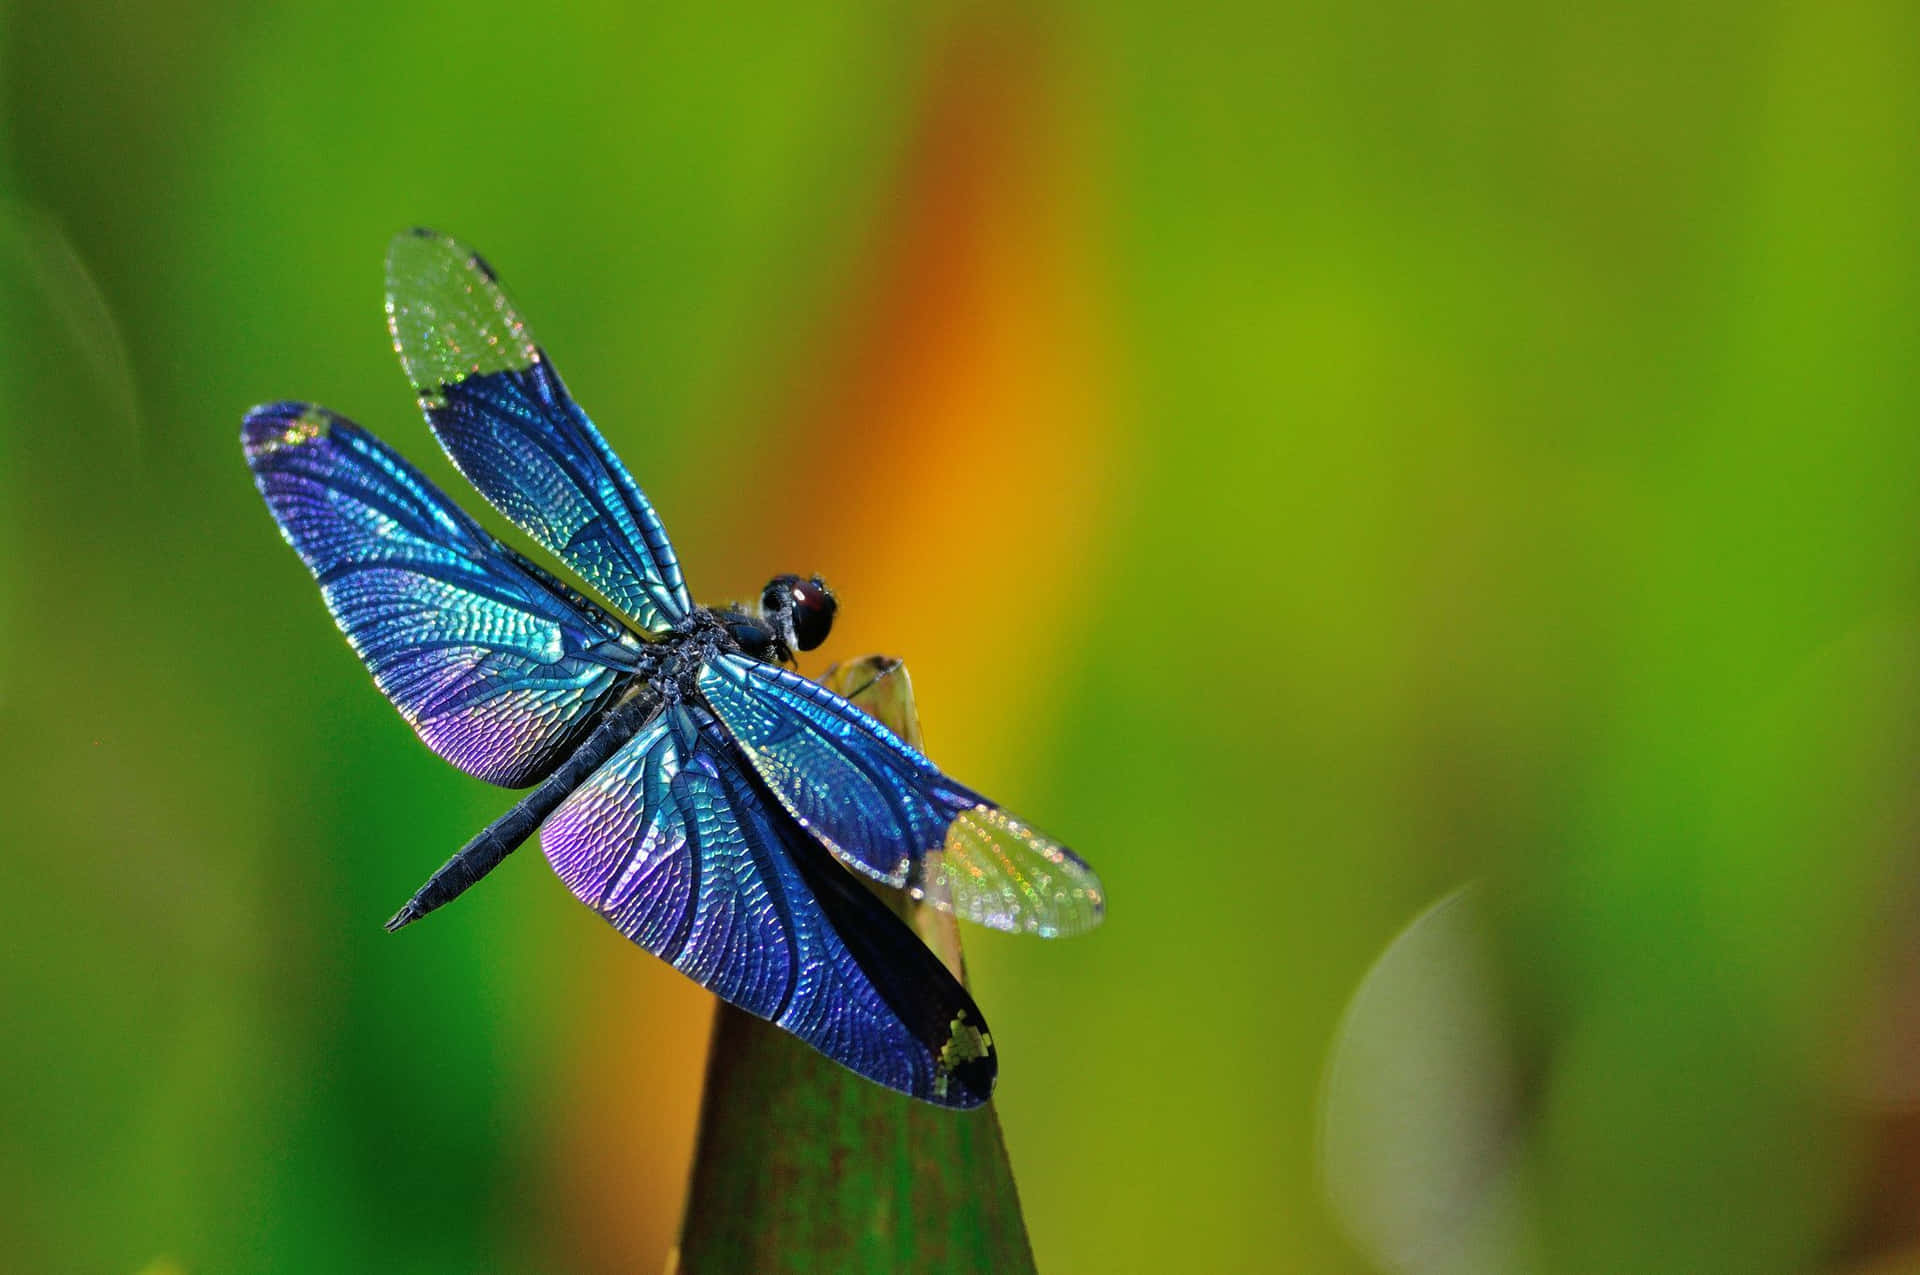 A Dragonfly in Mid-Flight